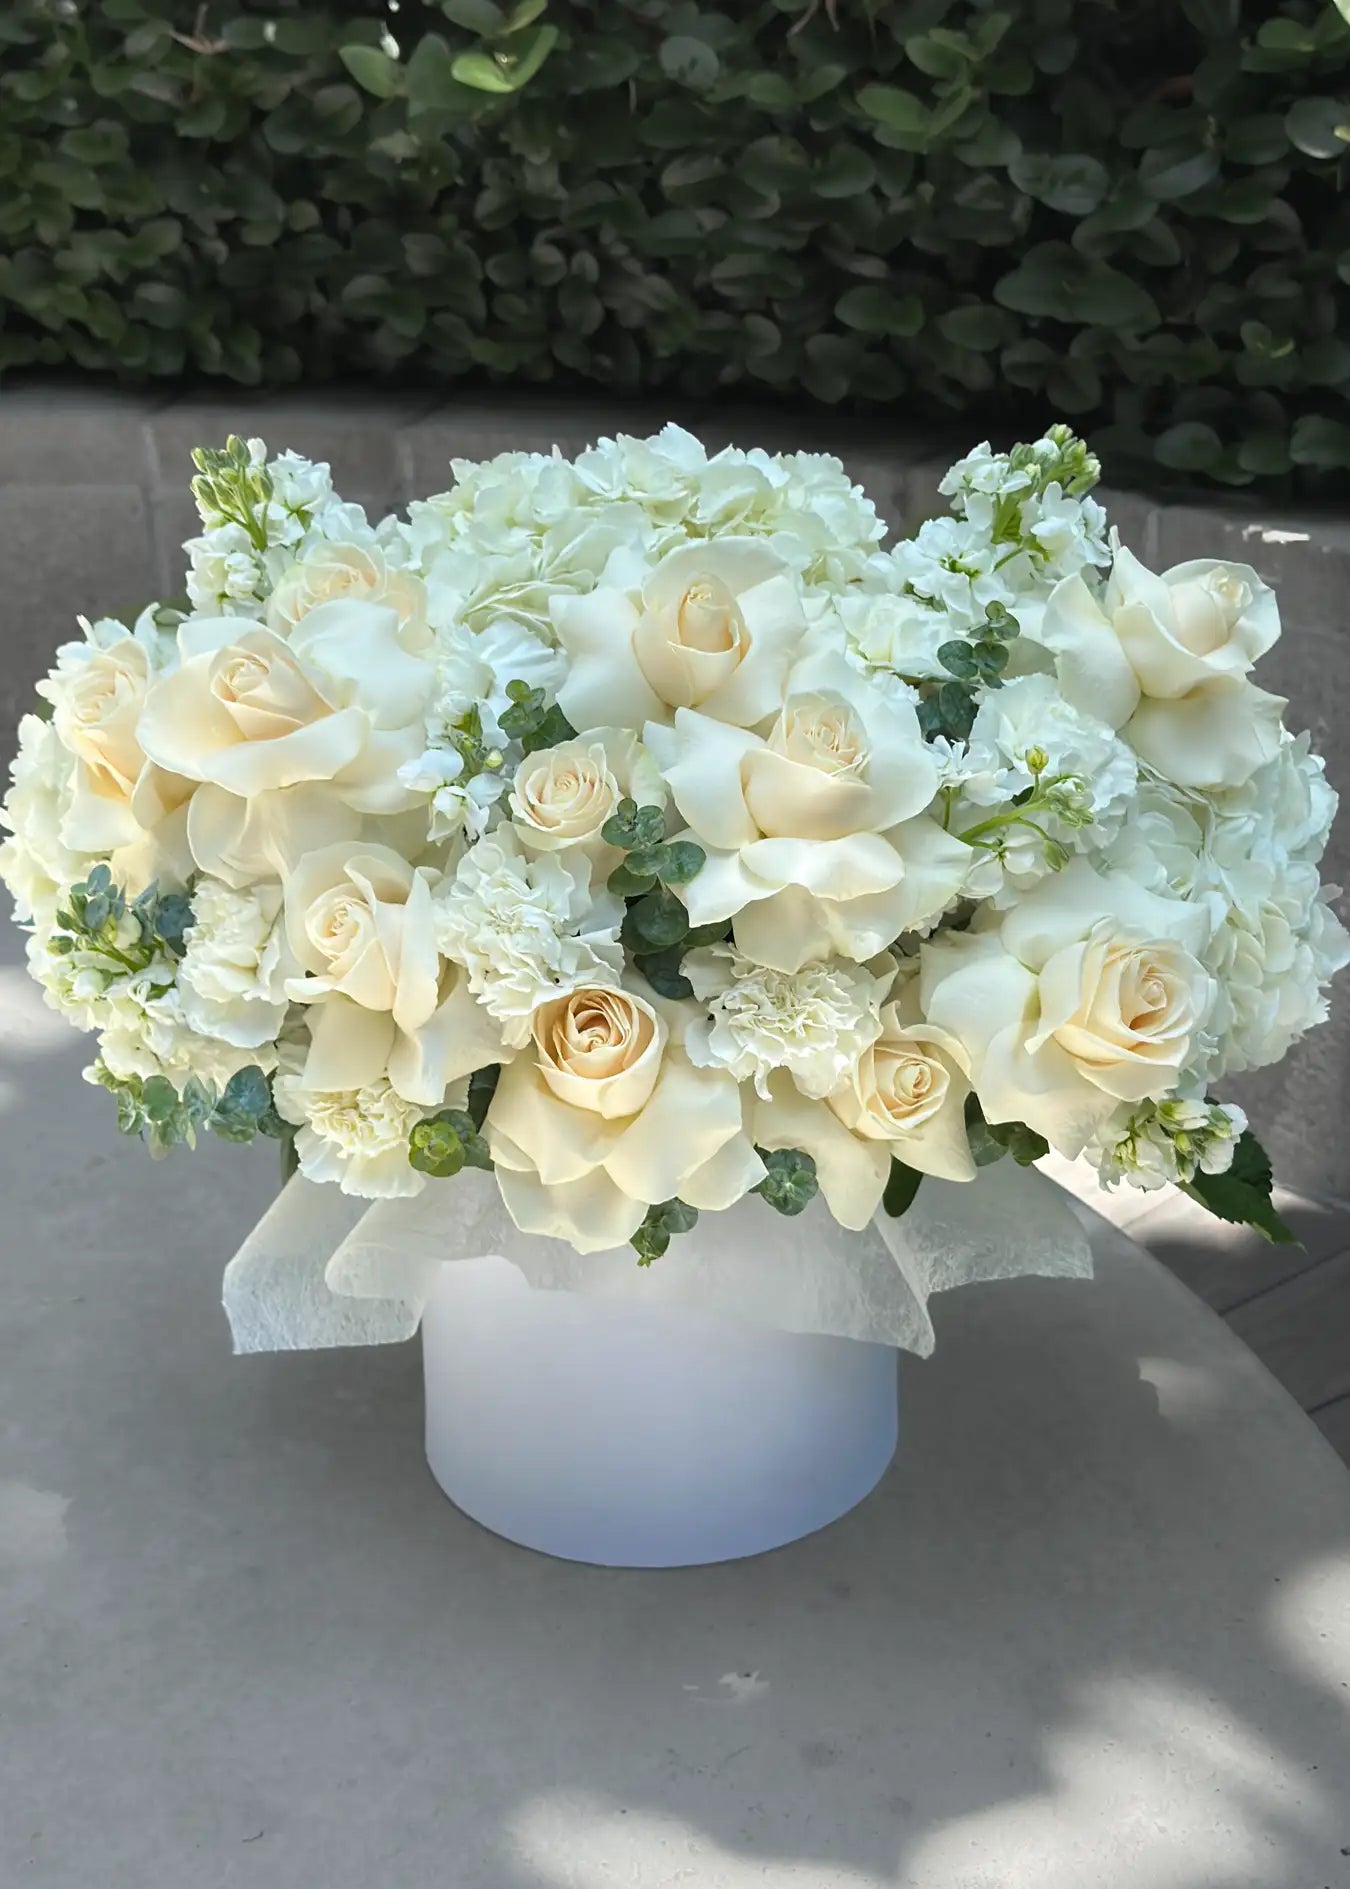 NO. 19. Box With White Flowers (roses, matthiolas, hydrangea)